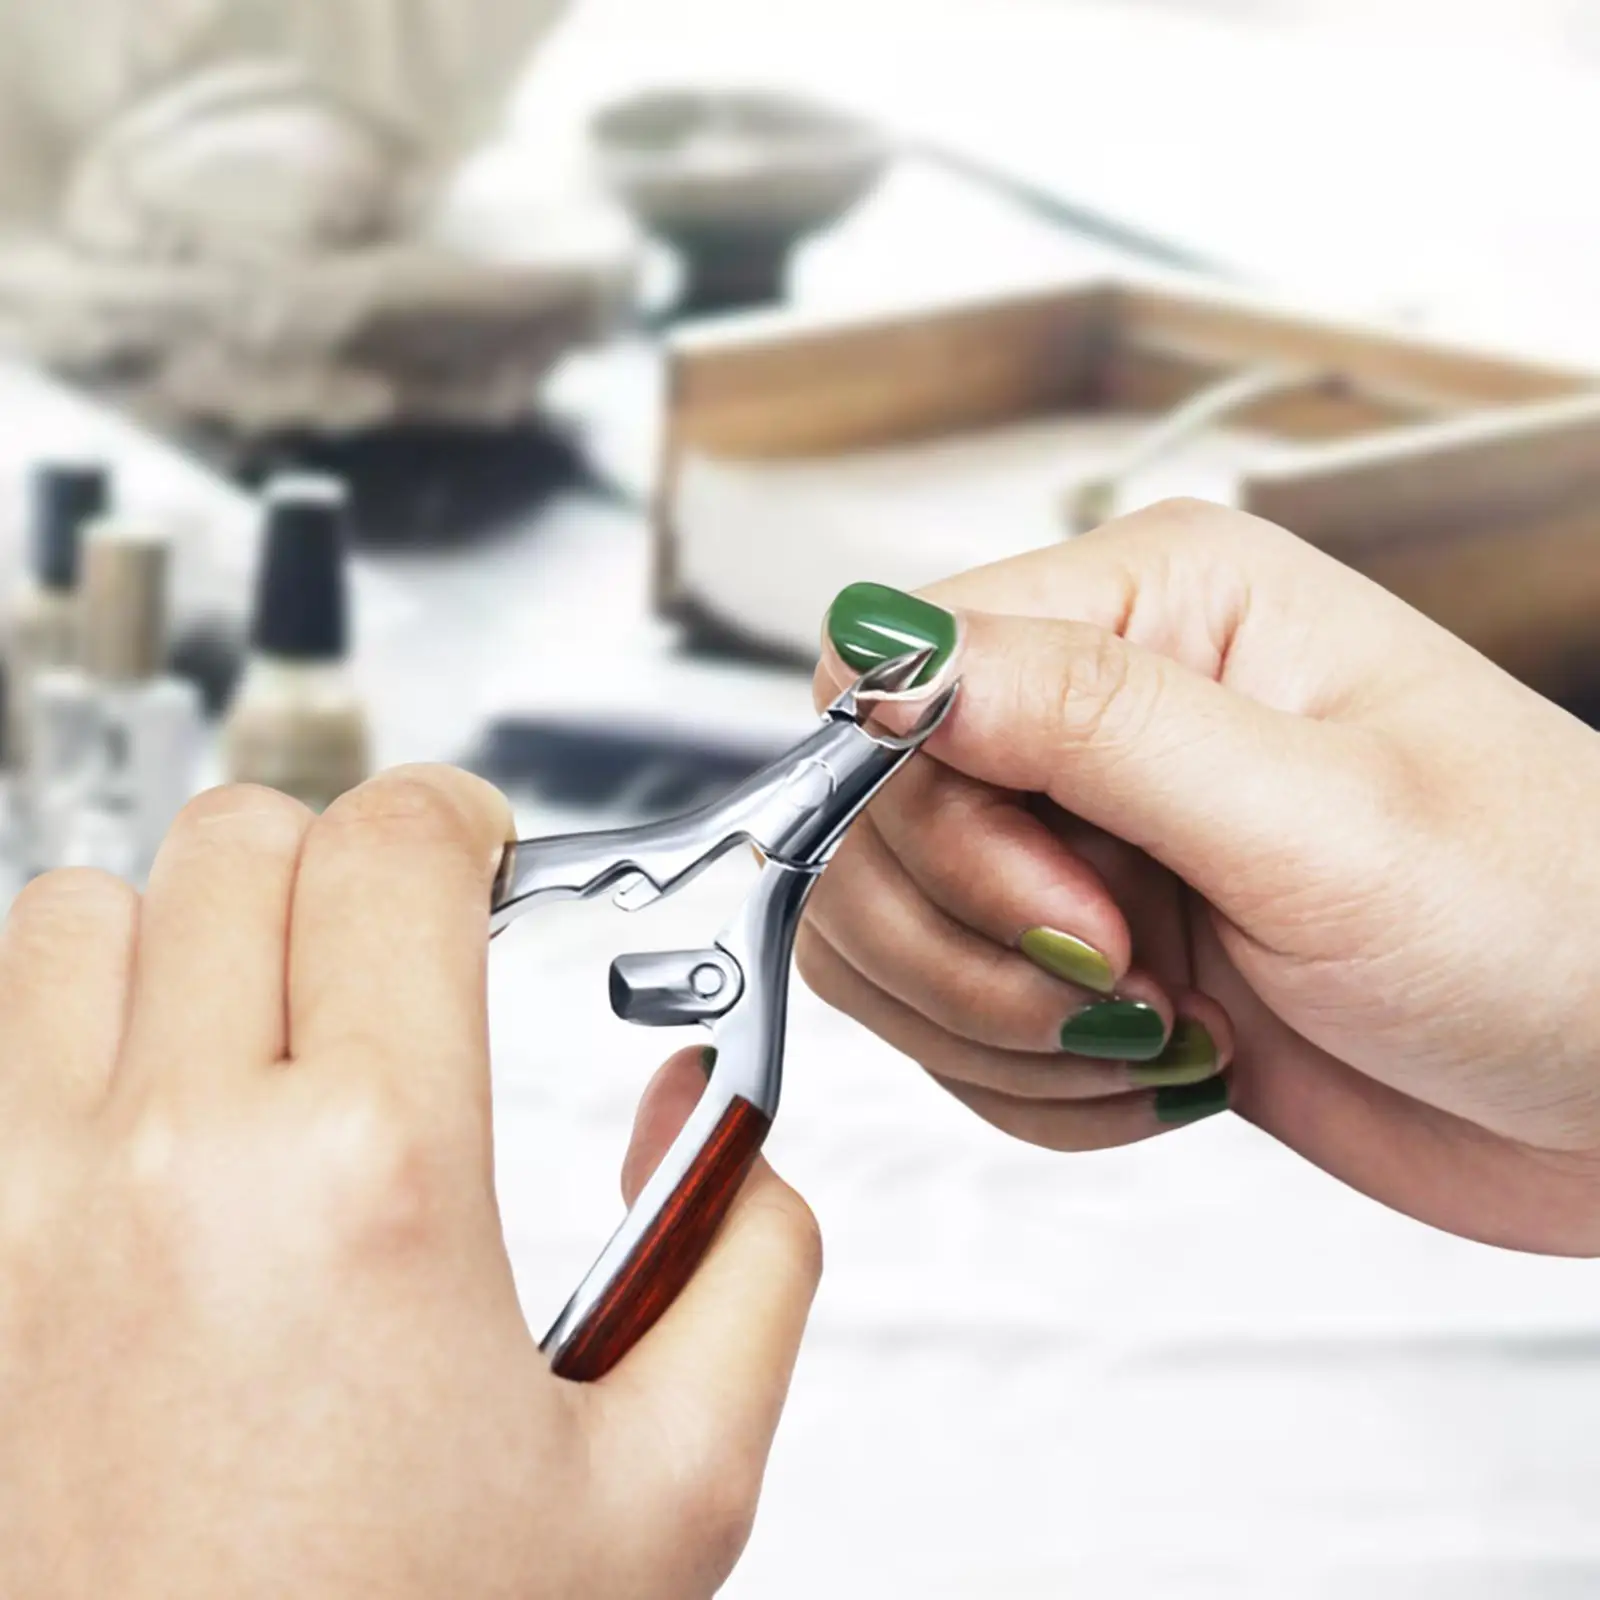 Manicure Nippers Durable Professional Precise Pedicure Manicure Tools Manicure Plier Nail Clipper for Fingernails and Toenails